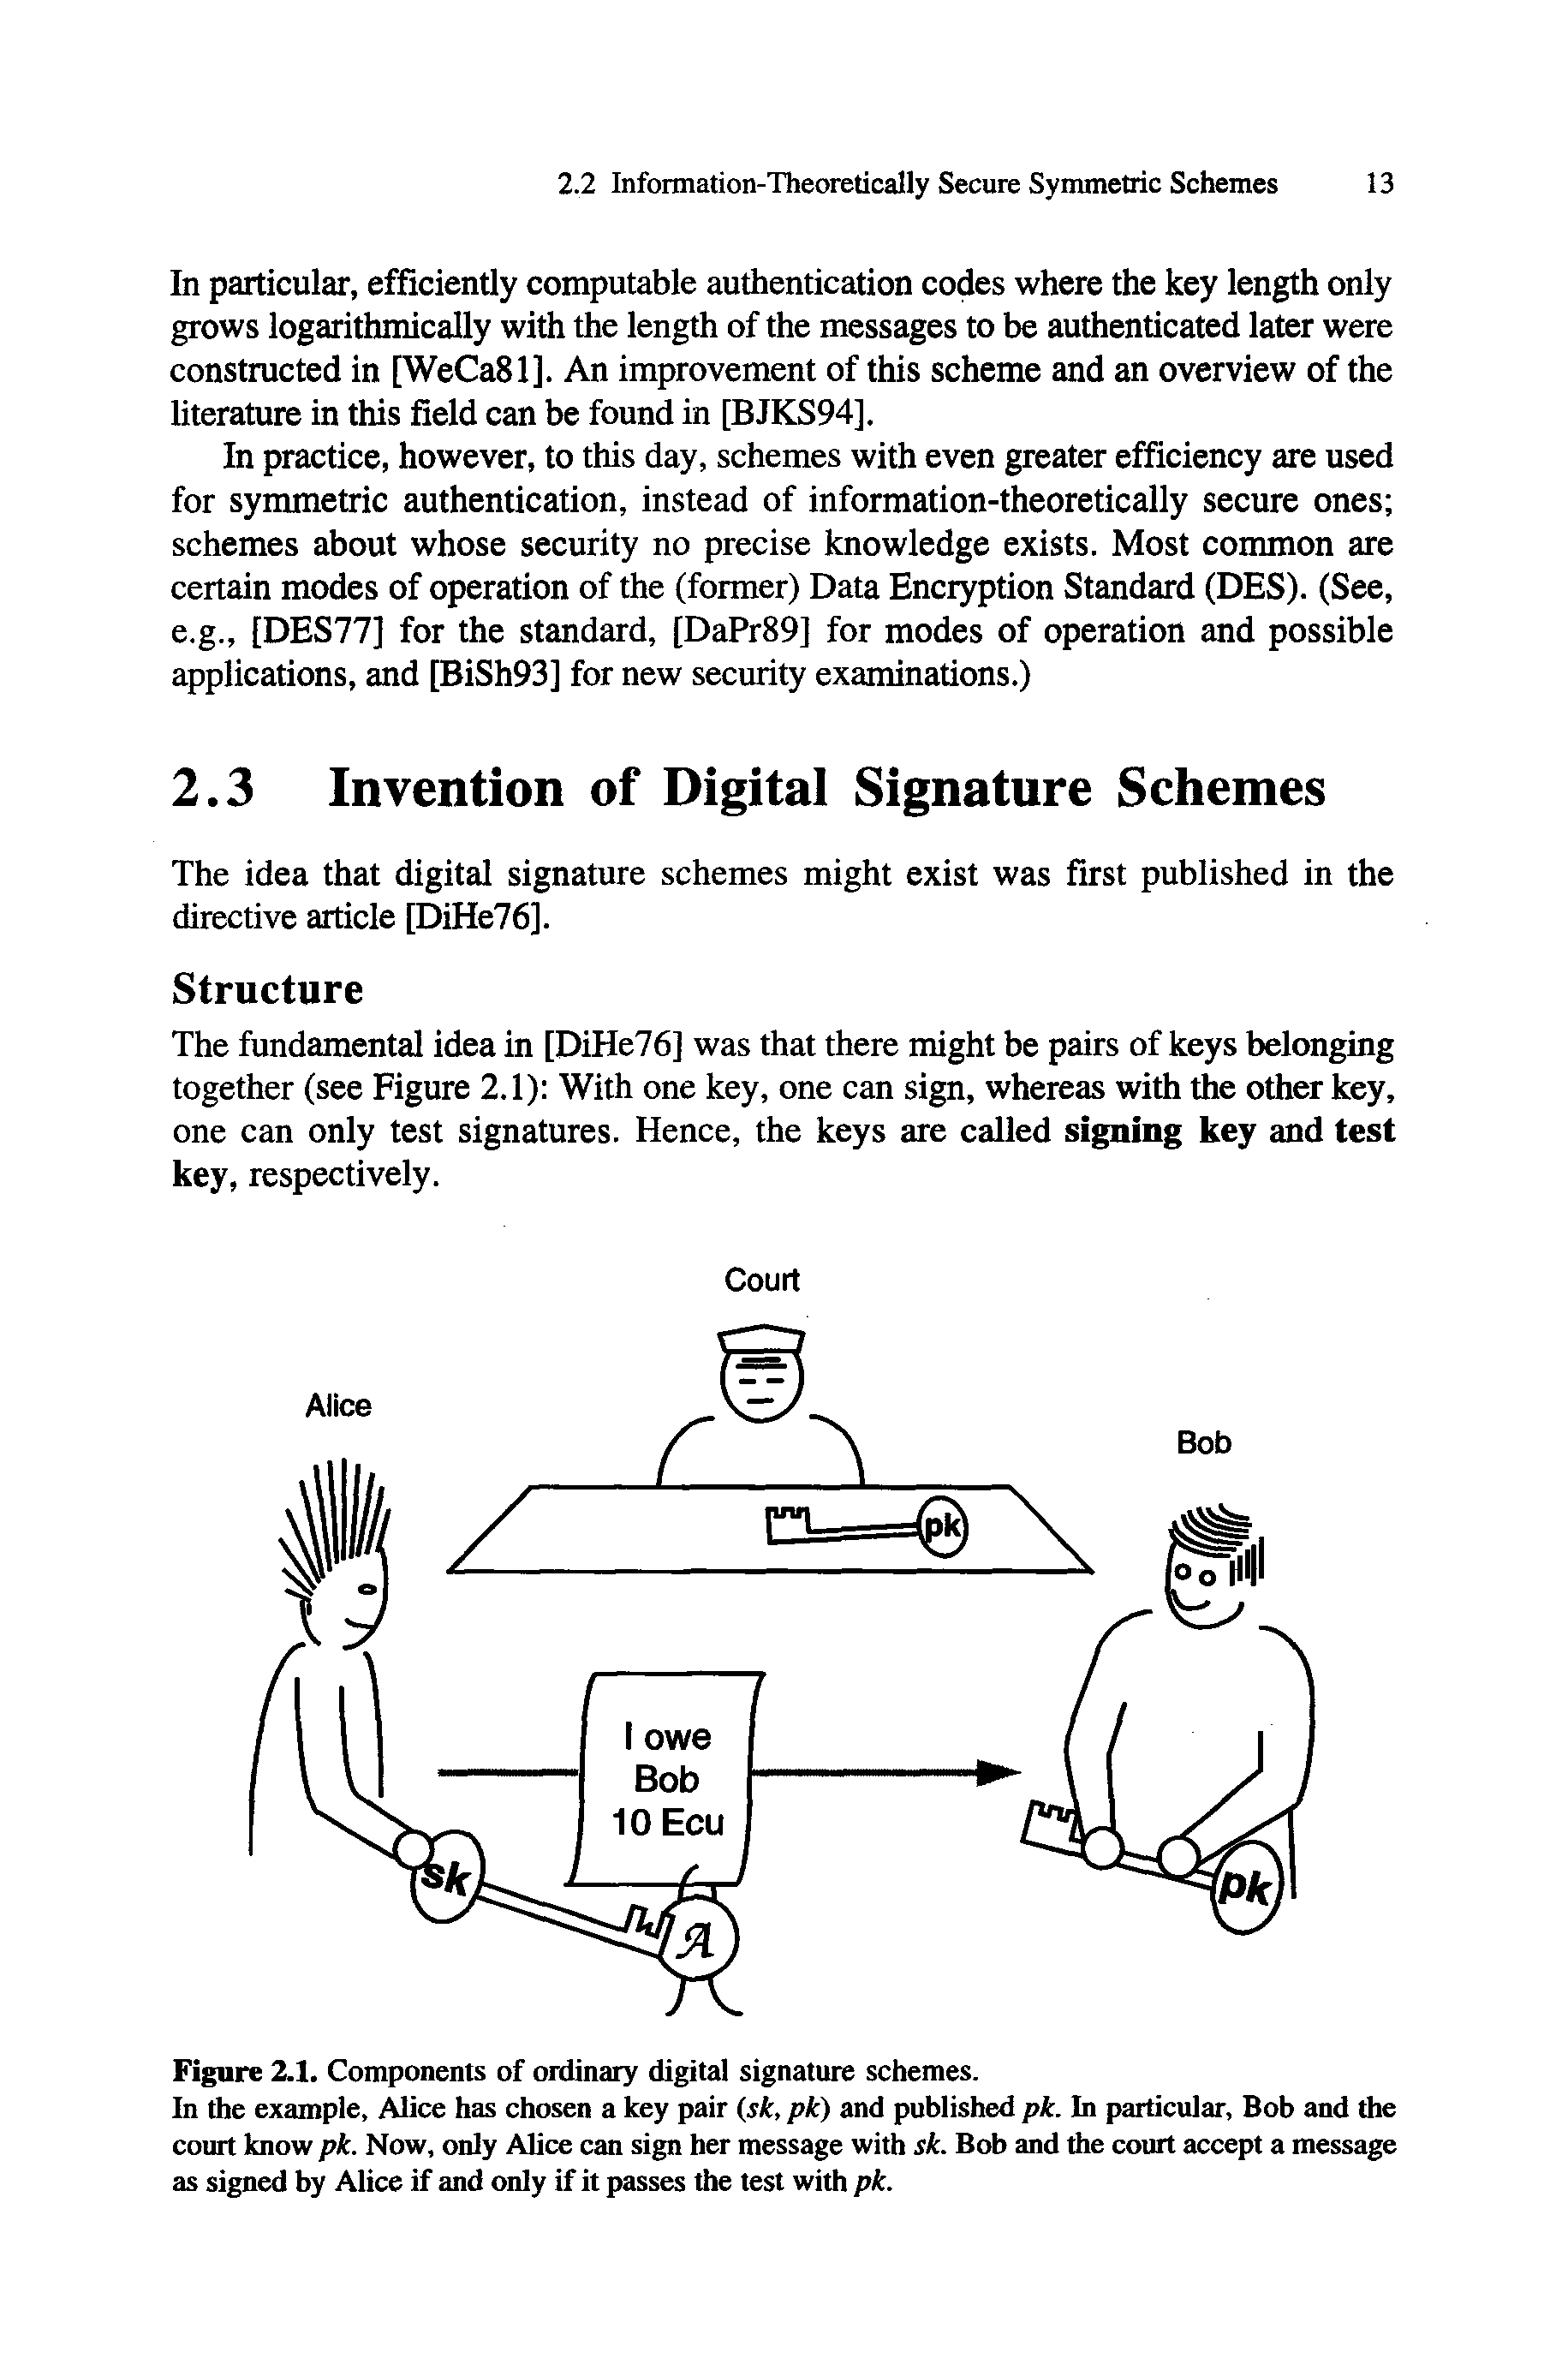 Figure 2.1. Components of ordinary digital signature schemes.